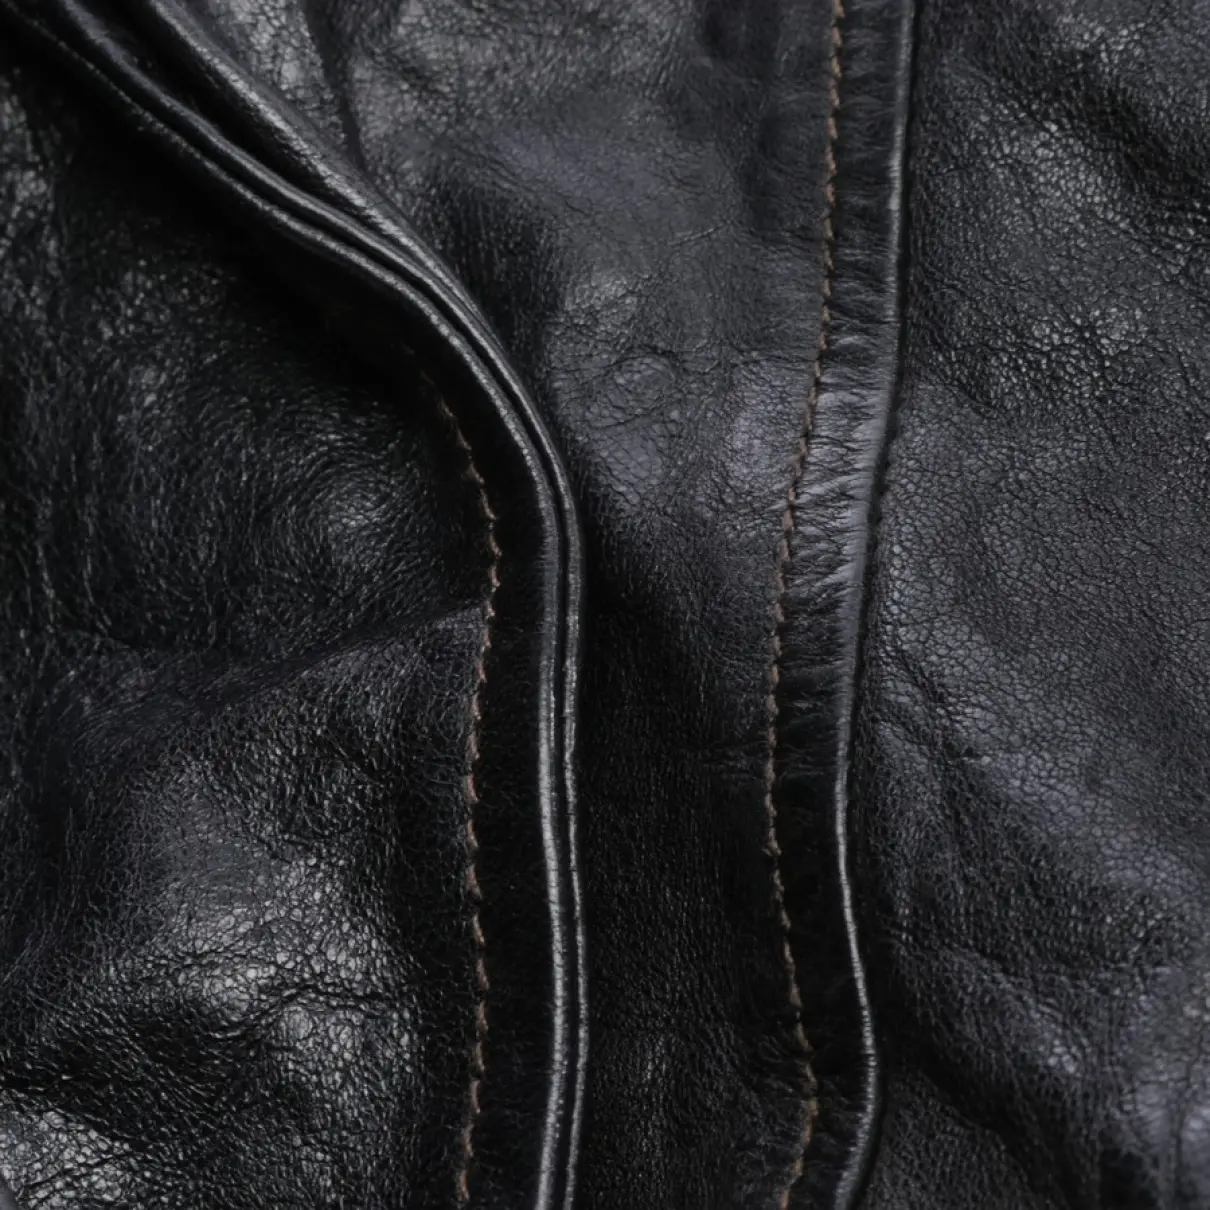 Leather jacket Htc